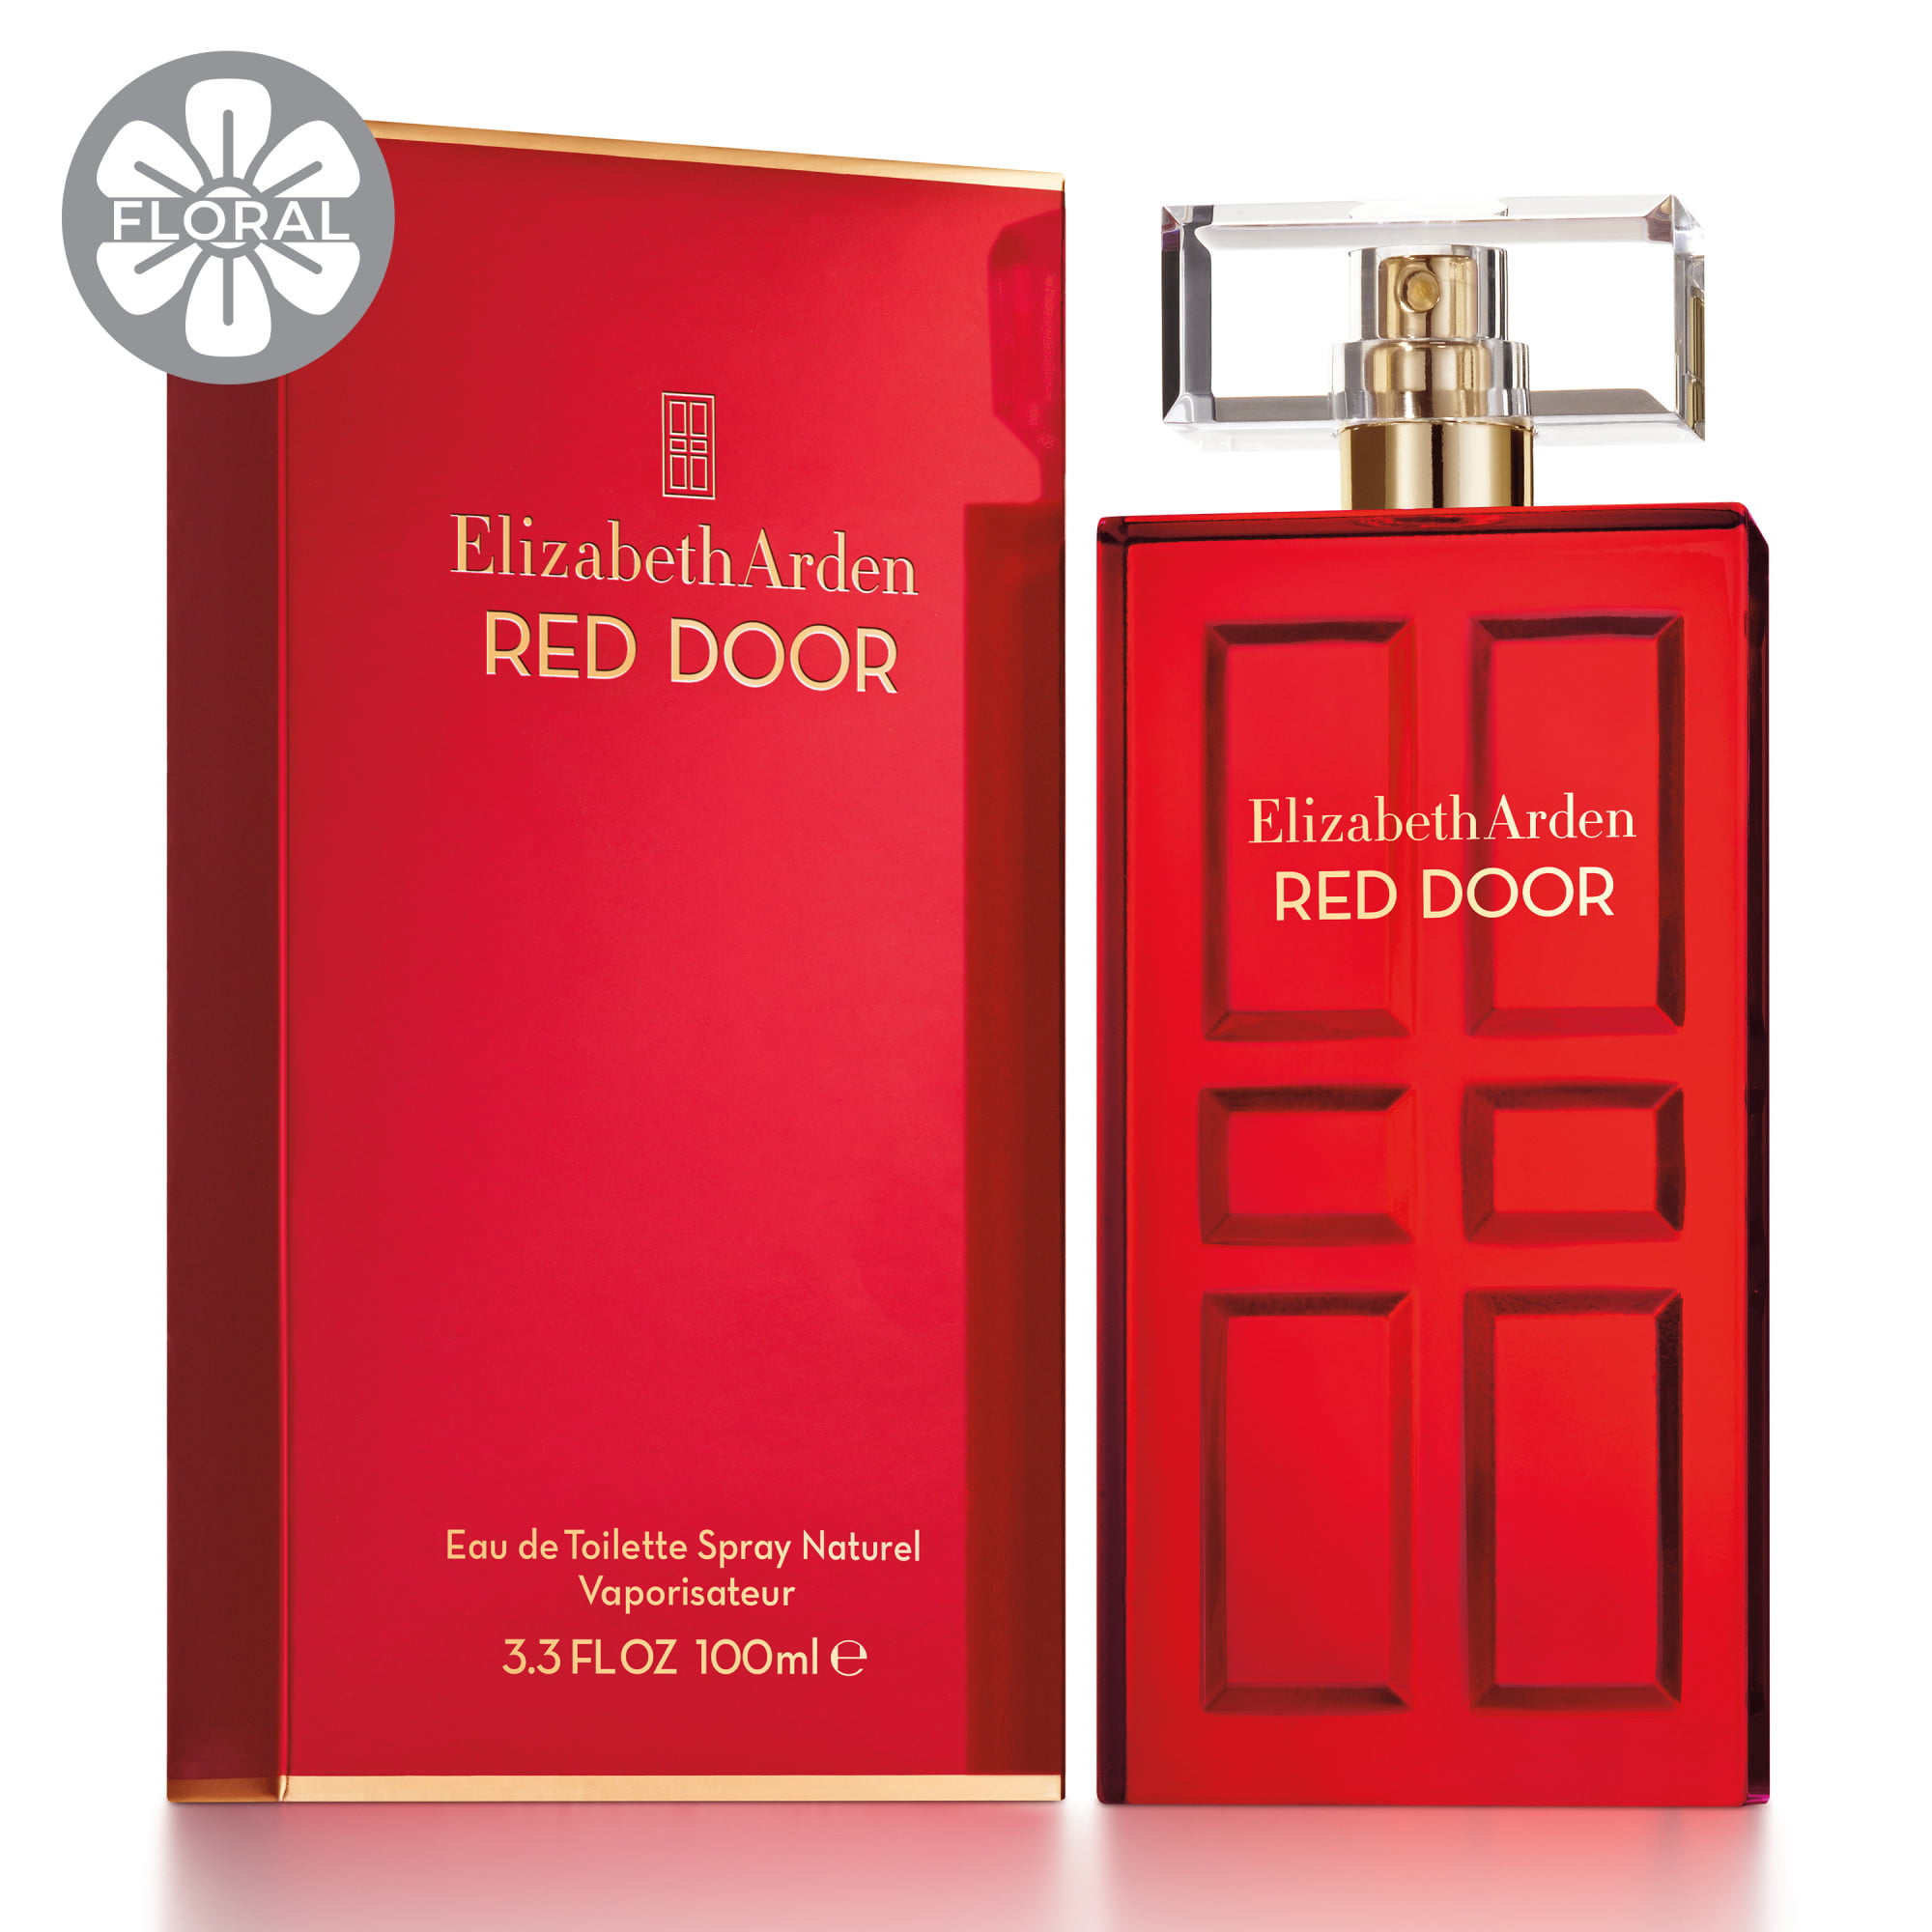 Elizabeth Arden Red Door Eau de Toilette, Perfume for Women, 3.3 fl oz - image 4 of 6